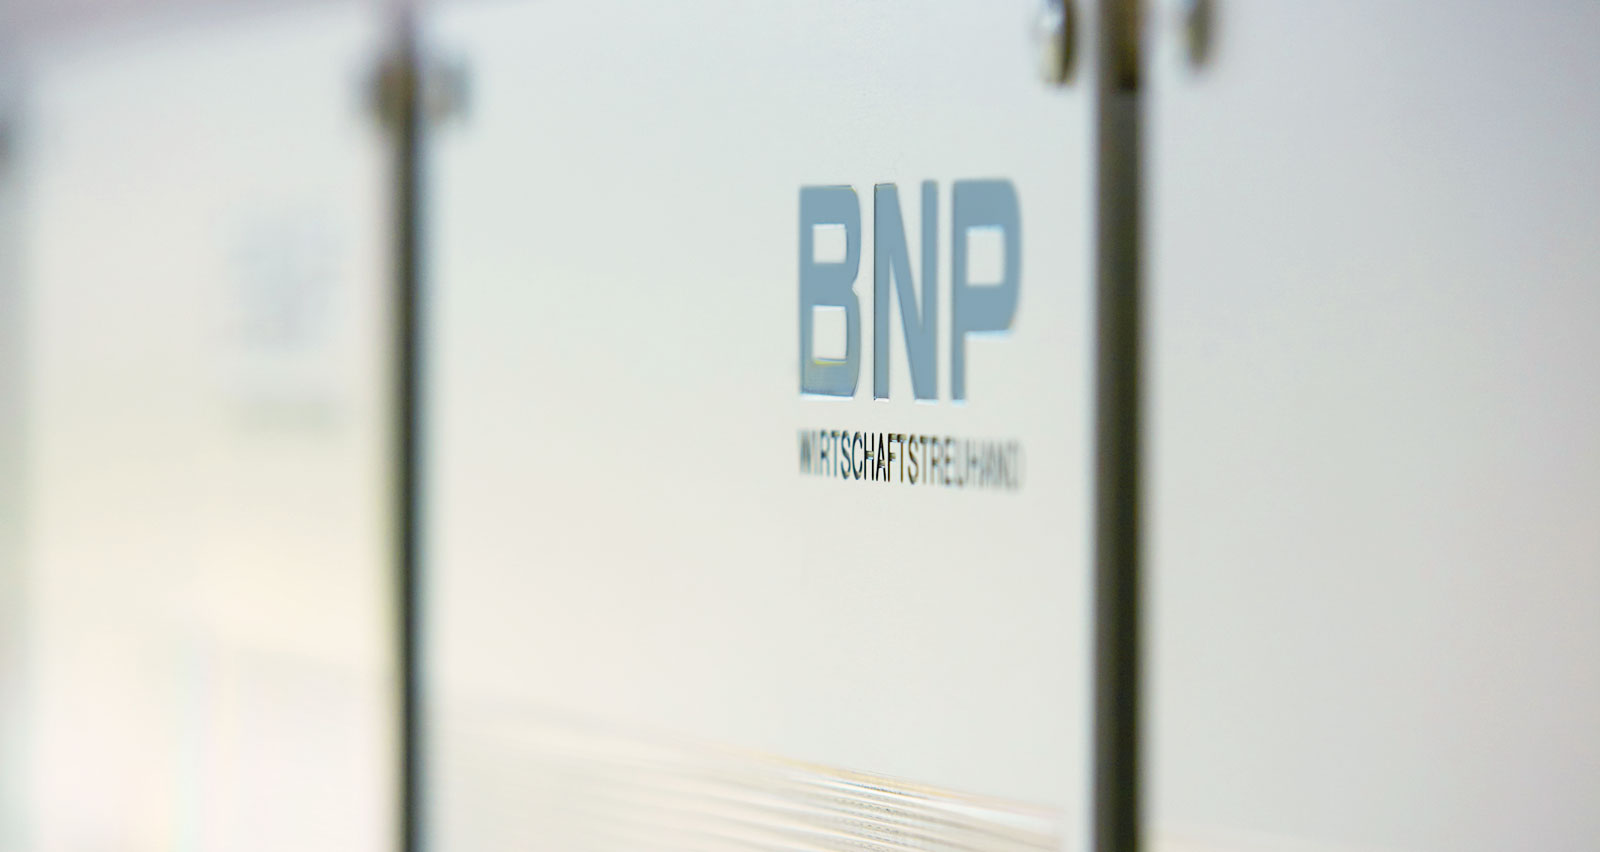 BNP - Standort